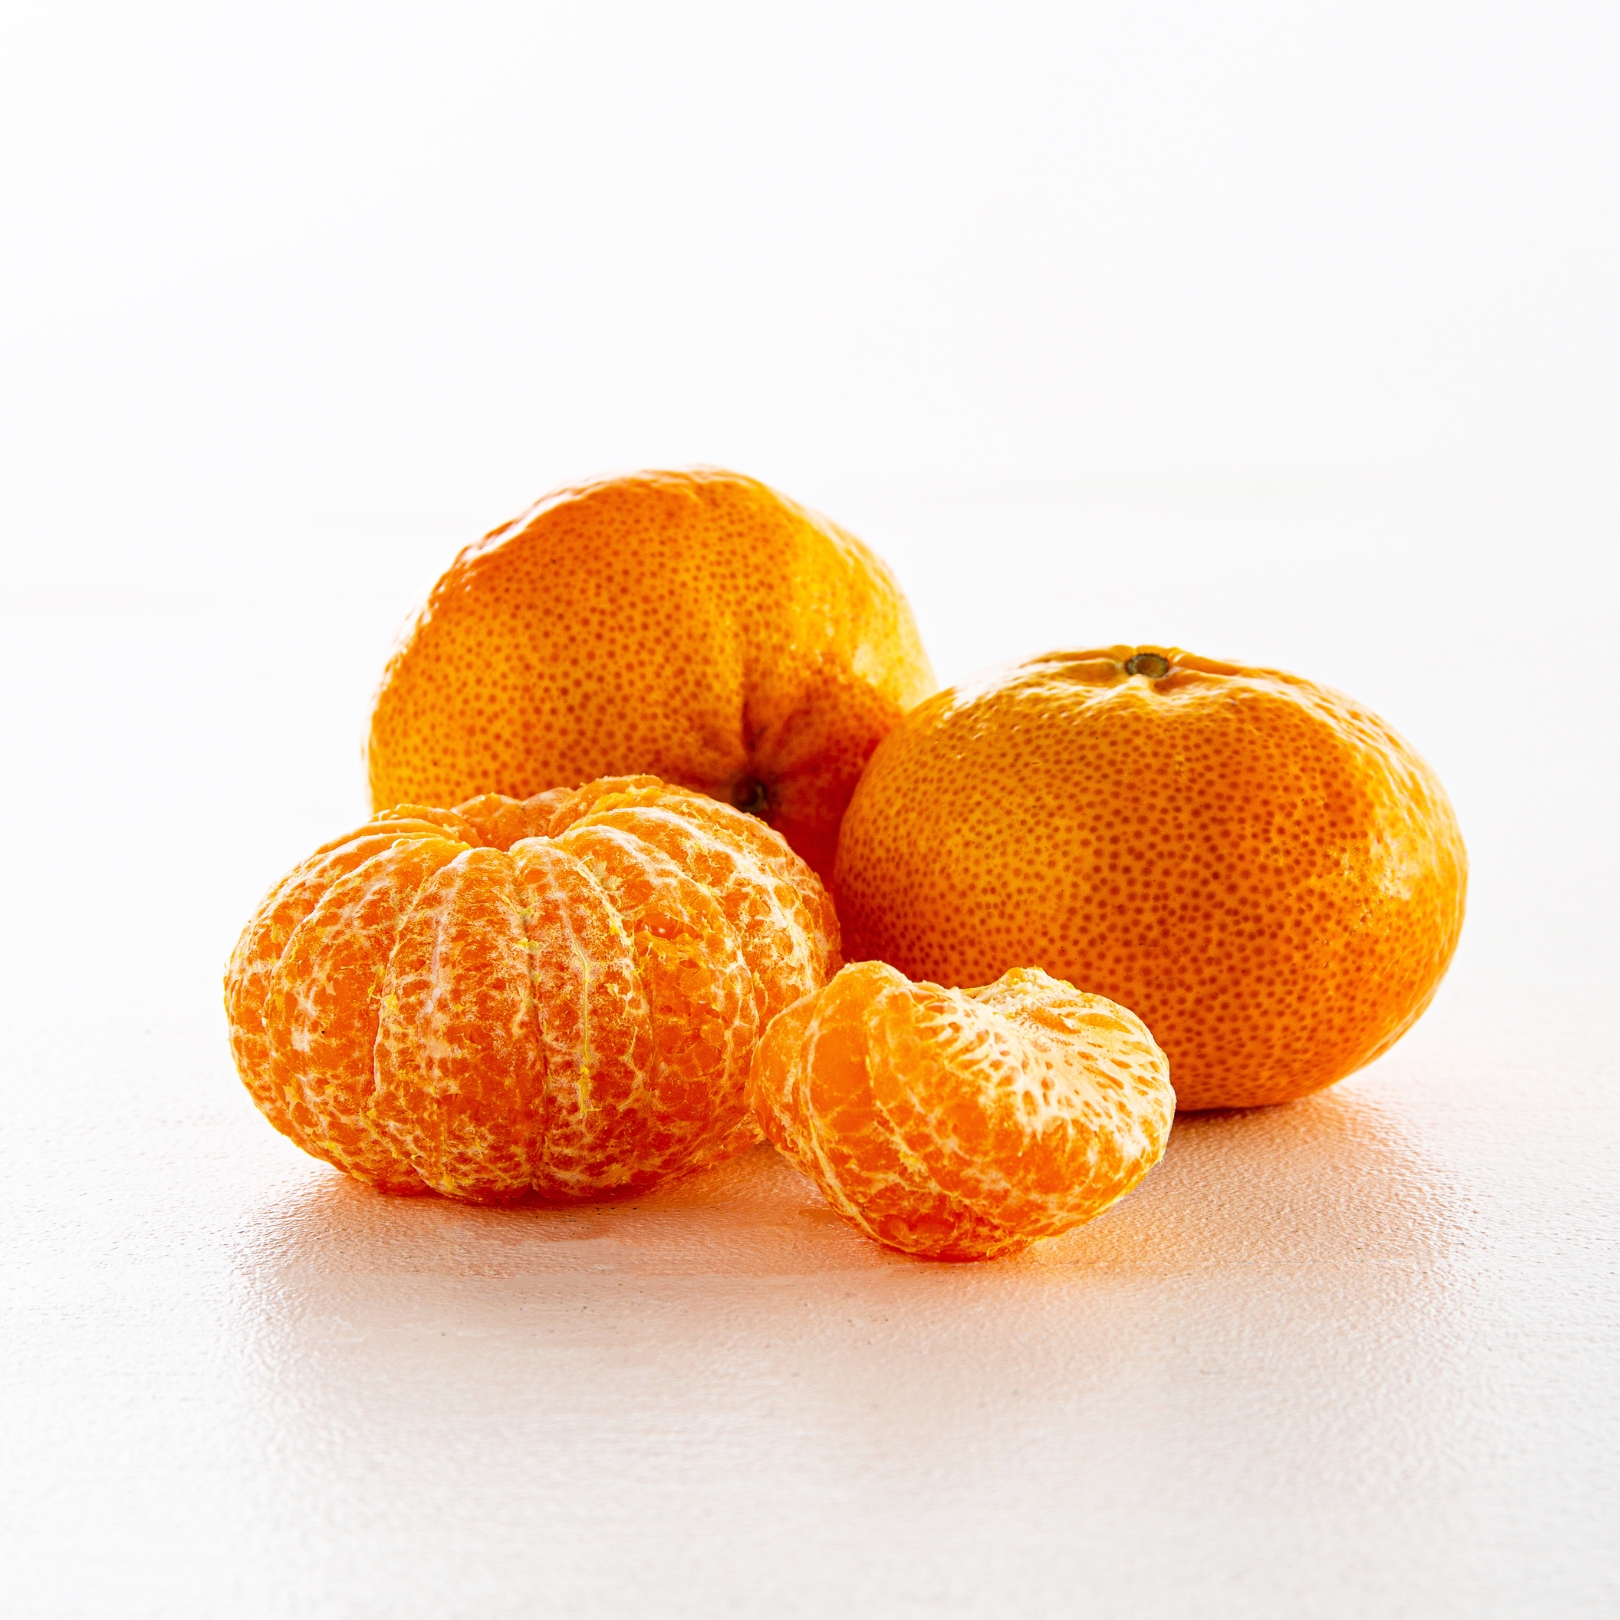 Buy Mandarins - Afourer Online NZ